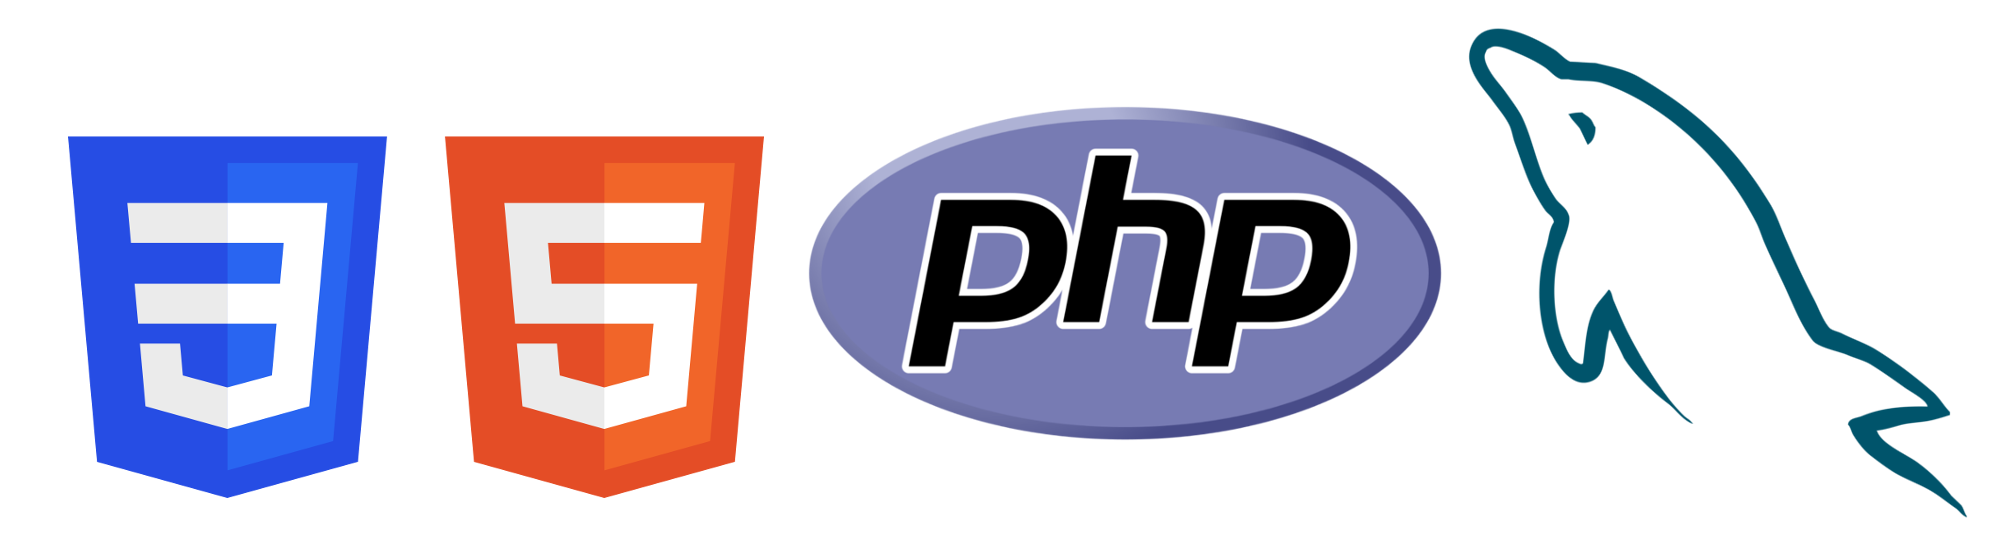 web-development-php-mysql-html-xampp-logo-png-download-2000-547